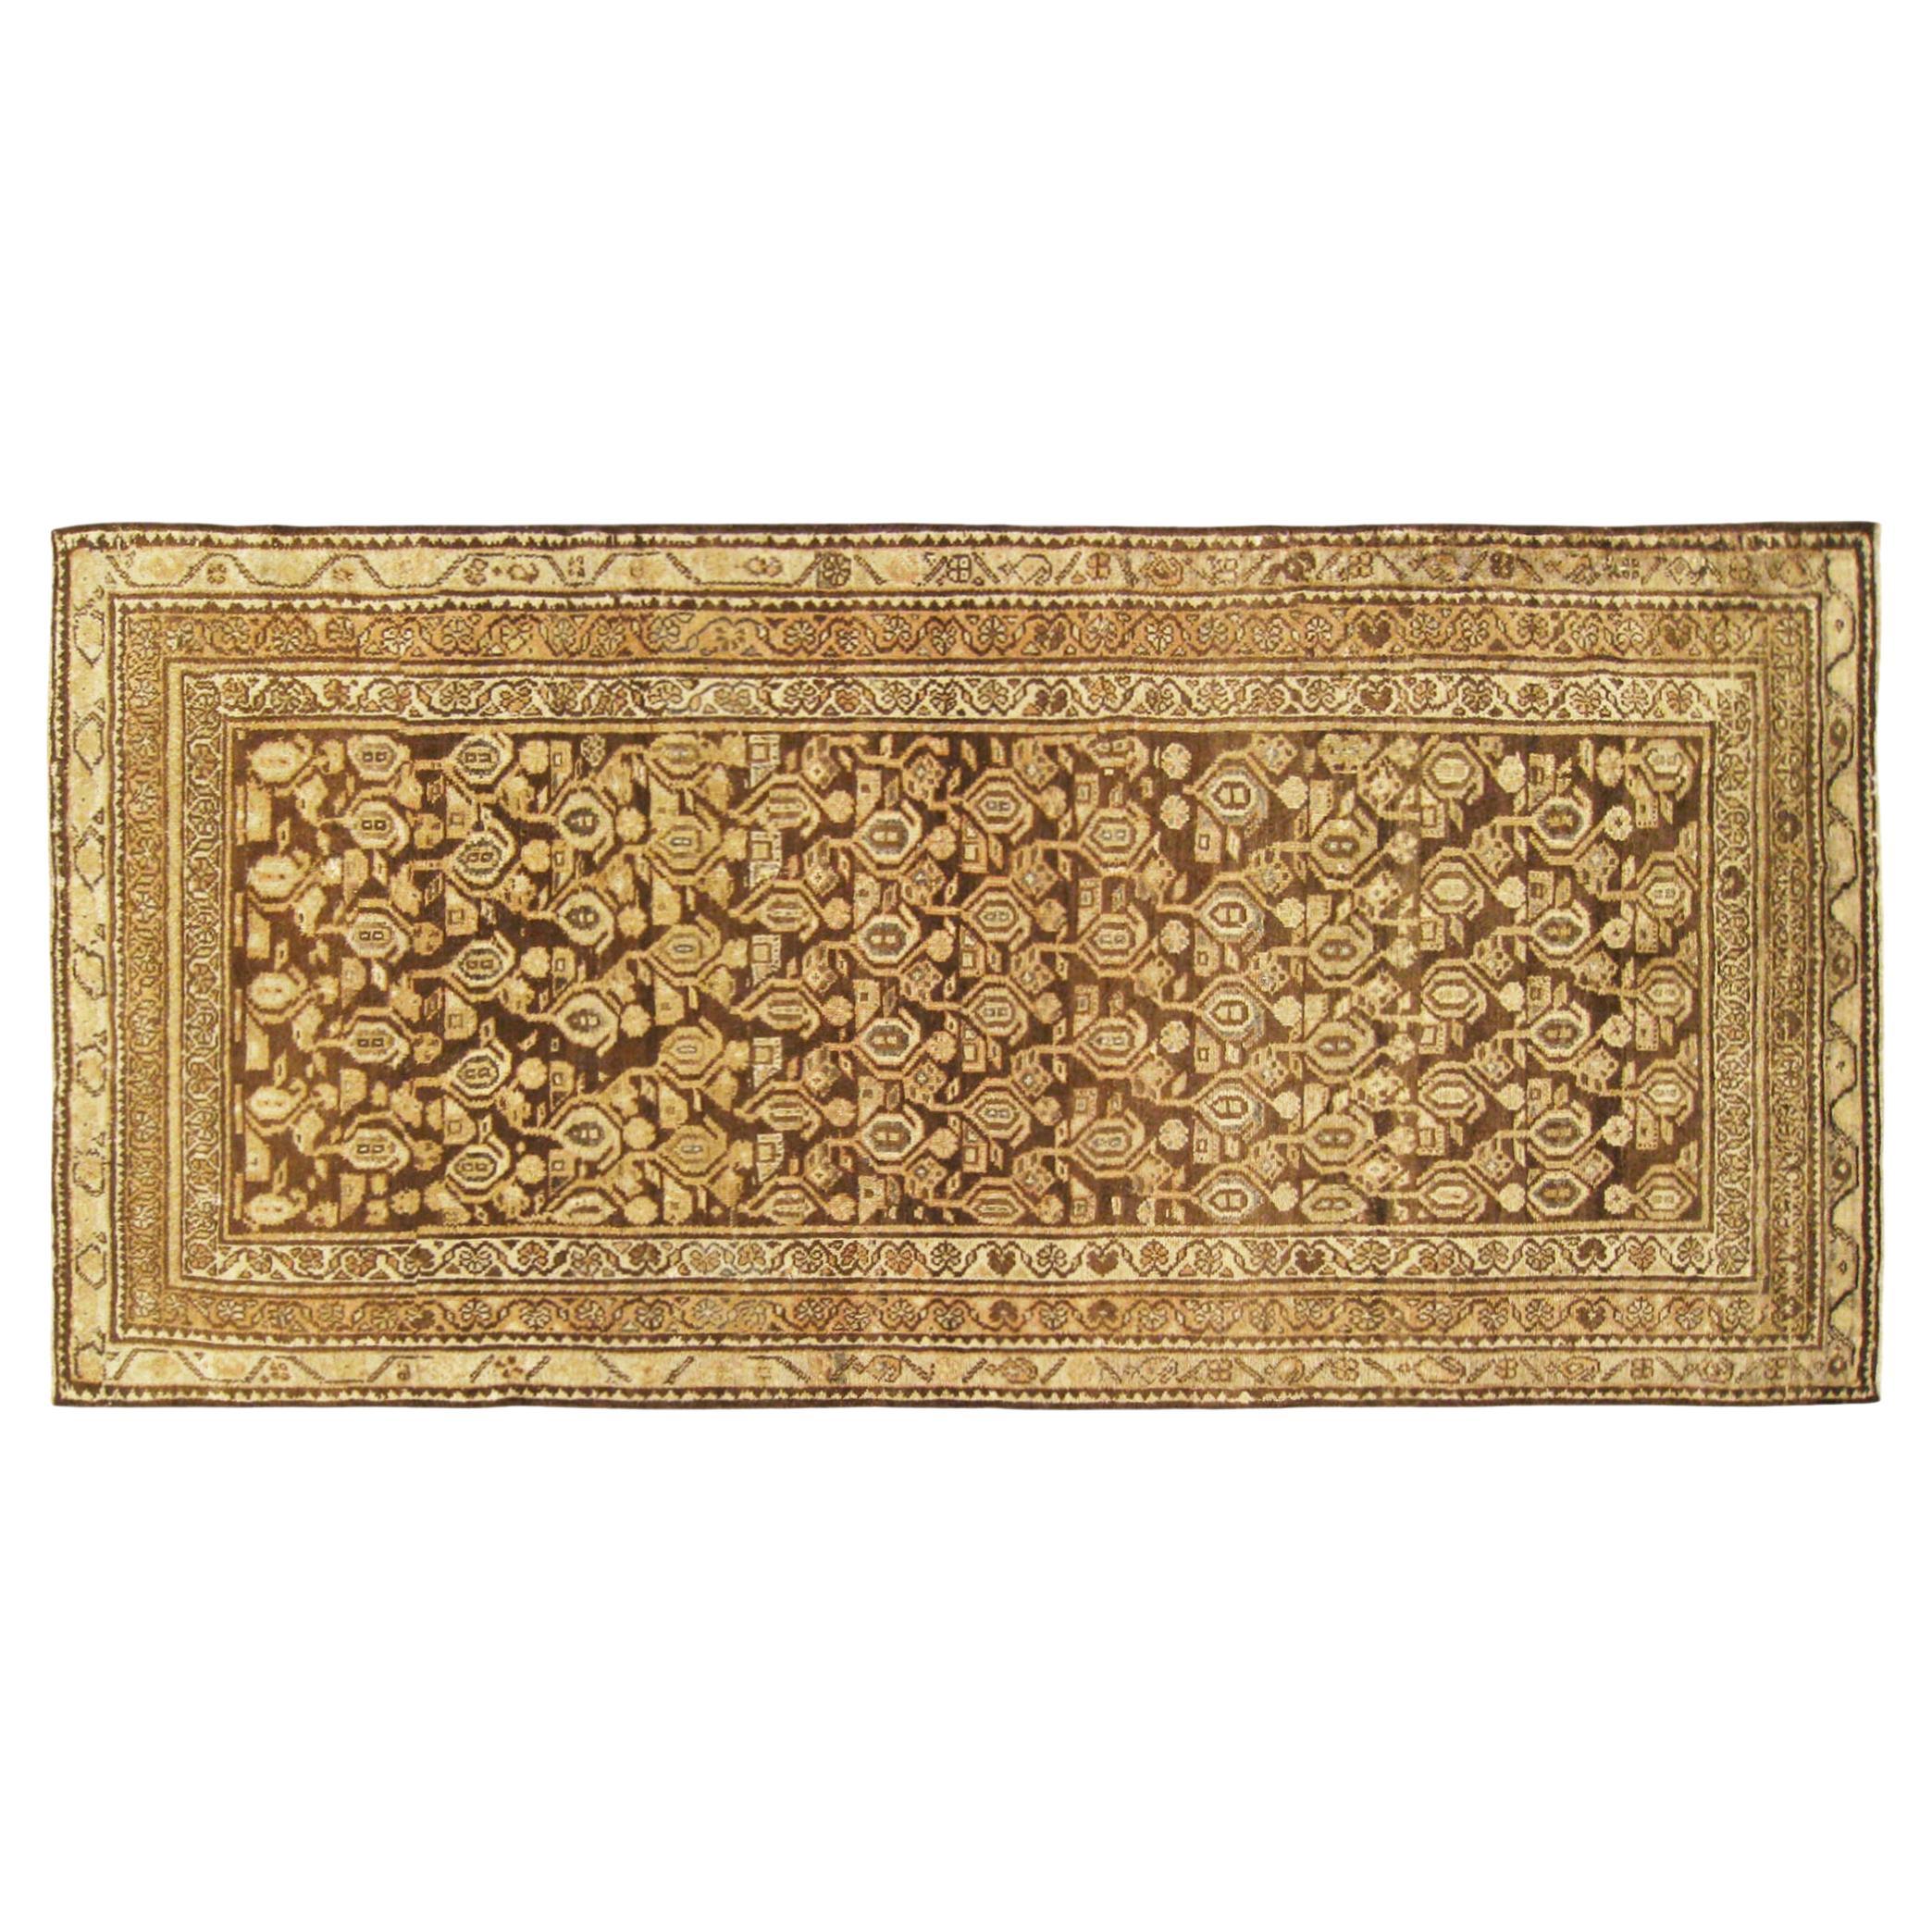 Antique Persian Hamadan Oriental Rug, in Runner Size, w/ Geometric Design